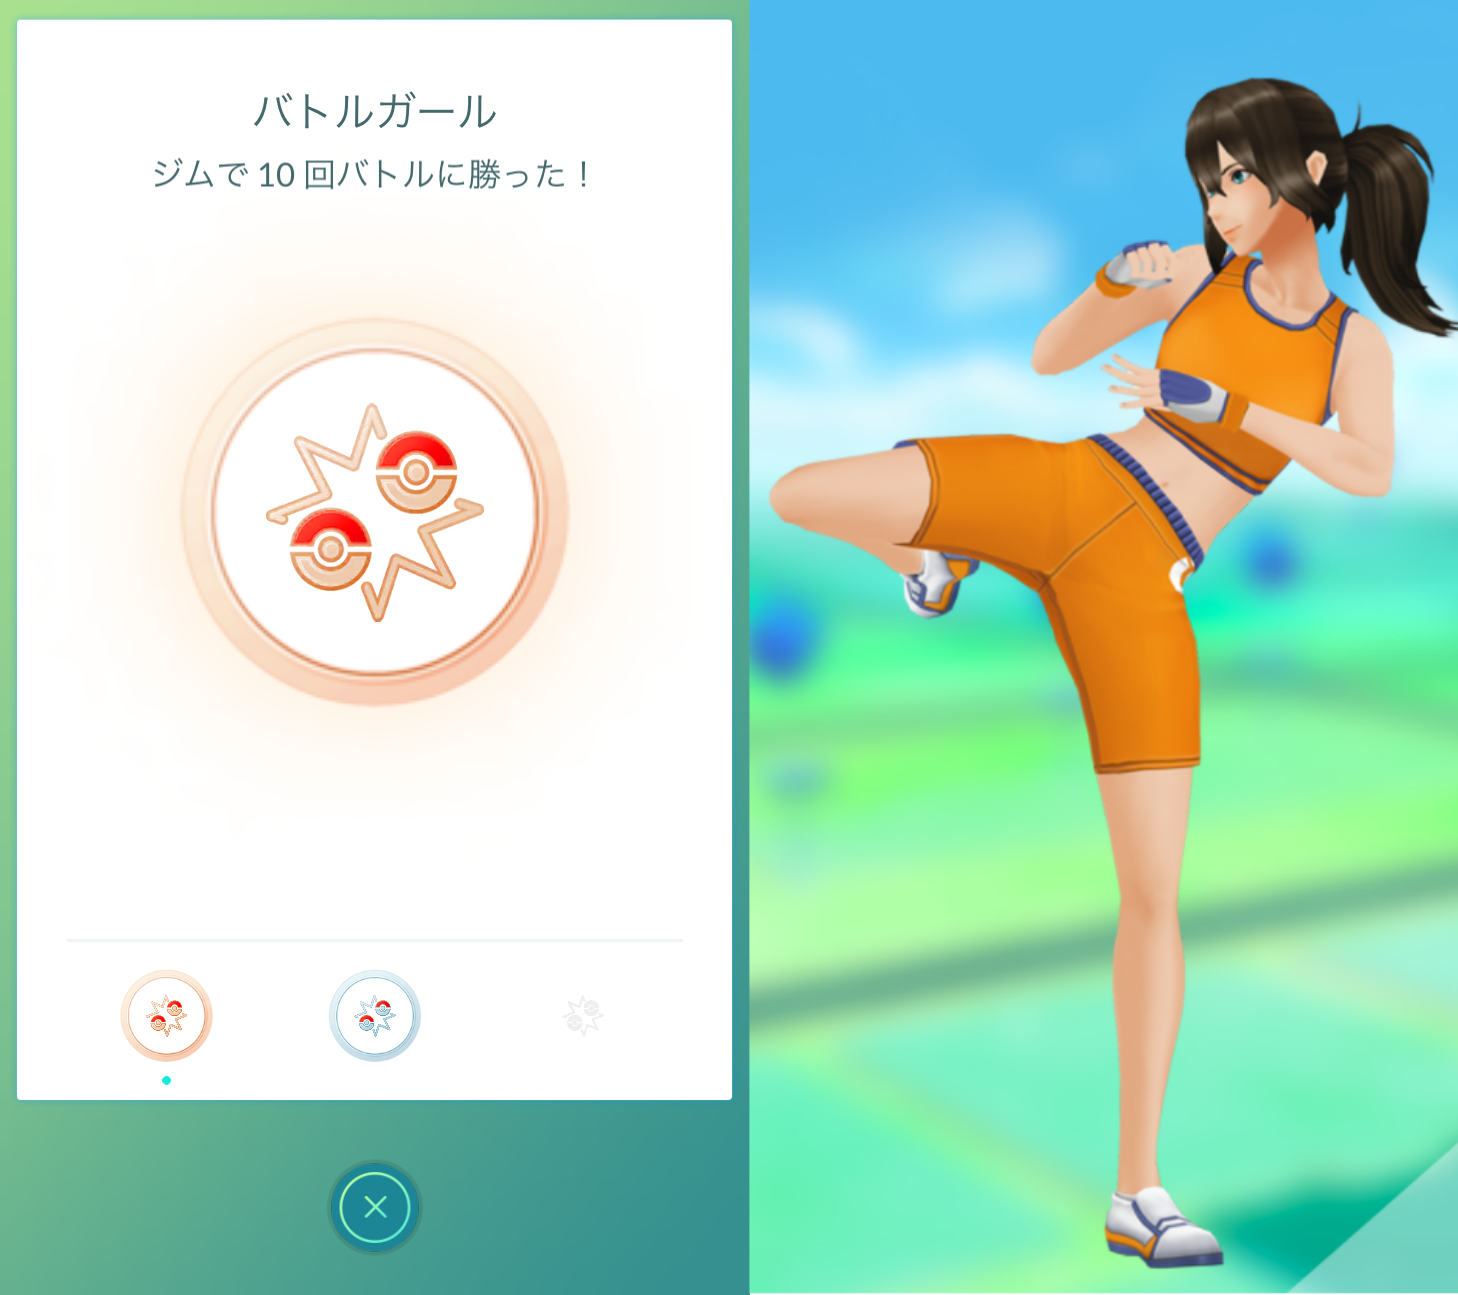 Pokemon Go ポケgo 新しい着せ替えアイテムが登場 でも今度の着せ替えは購入条件あり 購入条件の詳細も Moshbox